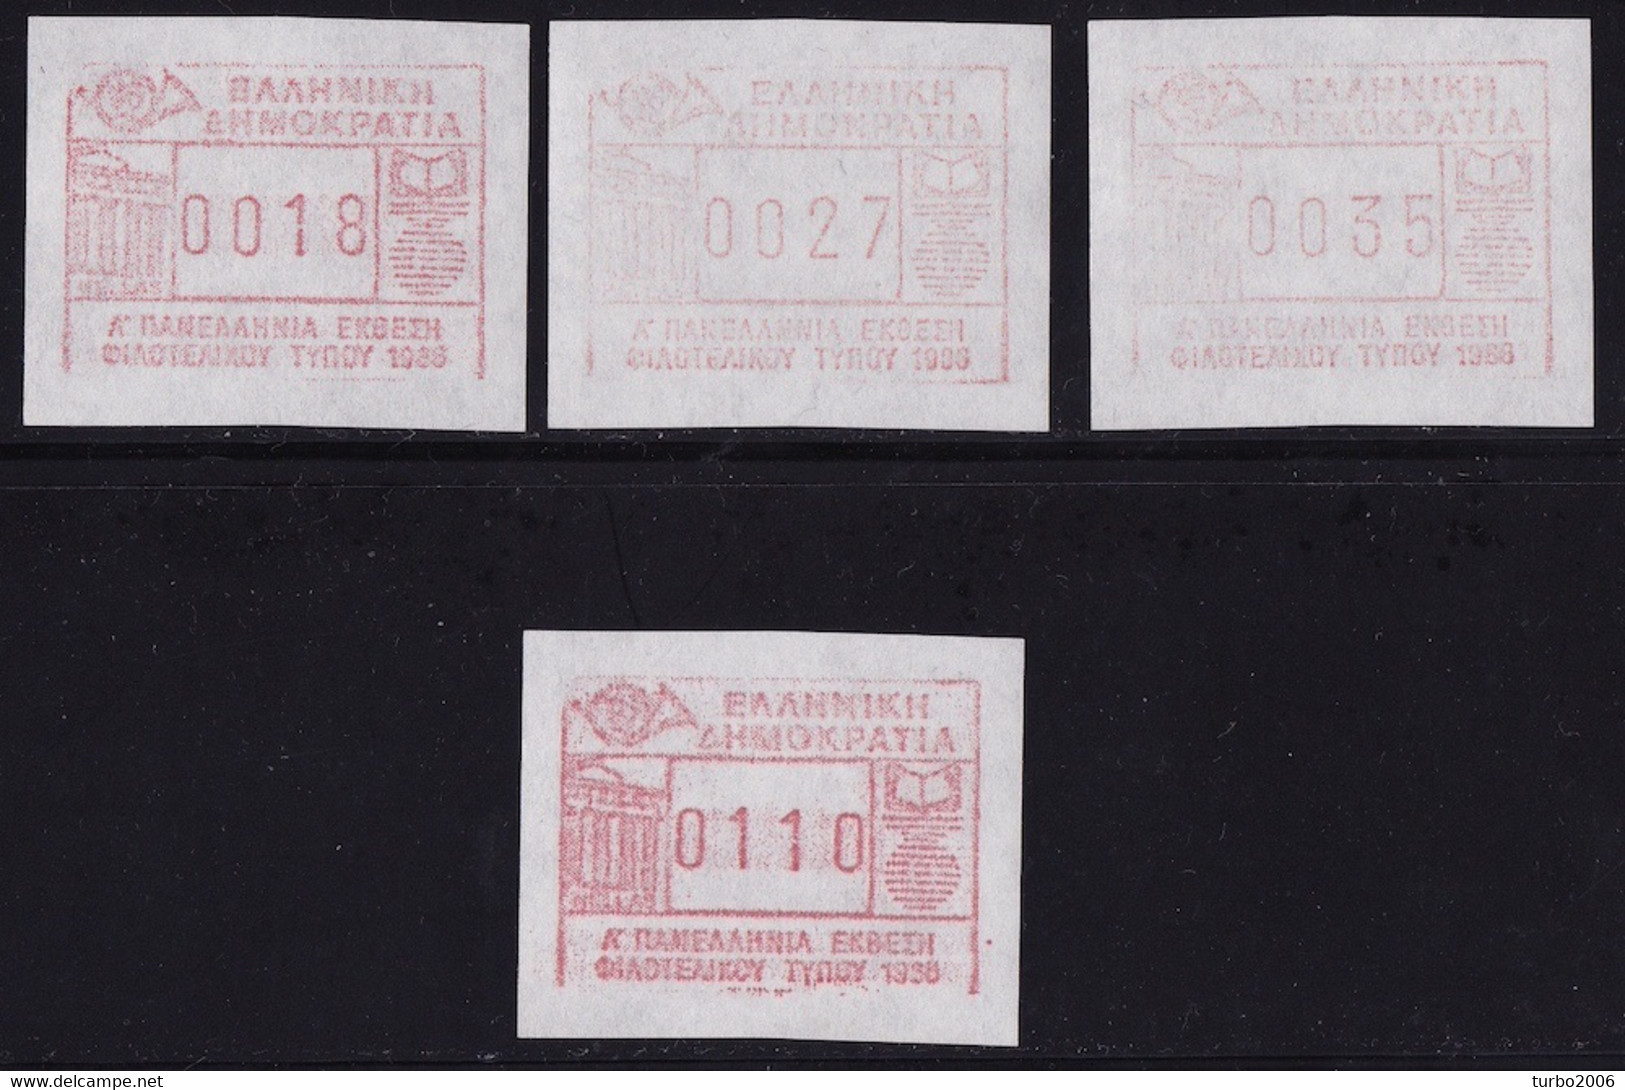 GREECE 1986 FRAMA Stamps For Panhelenic Literature Exhabition Set Of 18-27-35 DR + 110 Dr MNH Hellas M 12 - Viñetas De Franqueo [ATM]